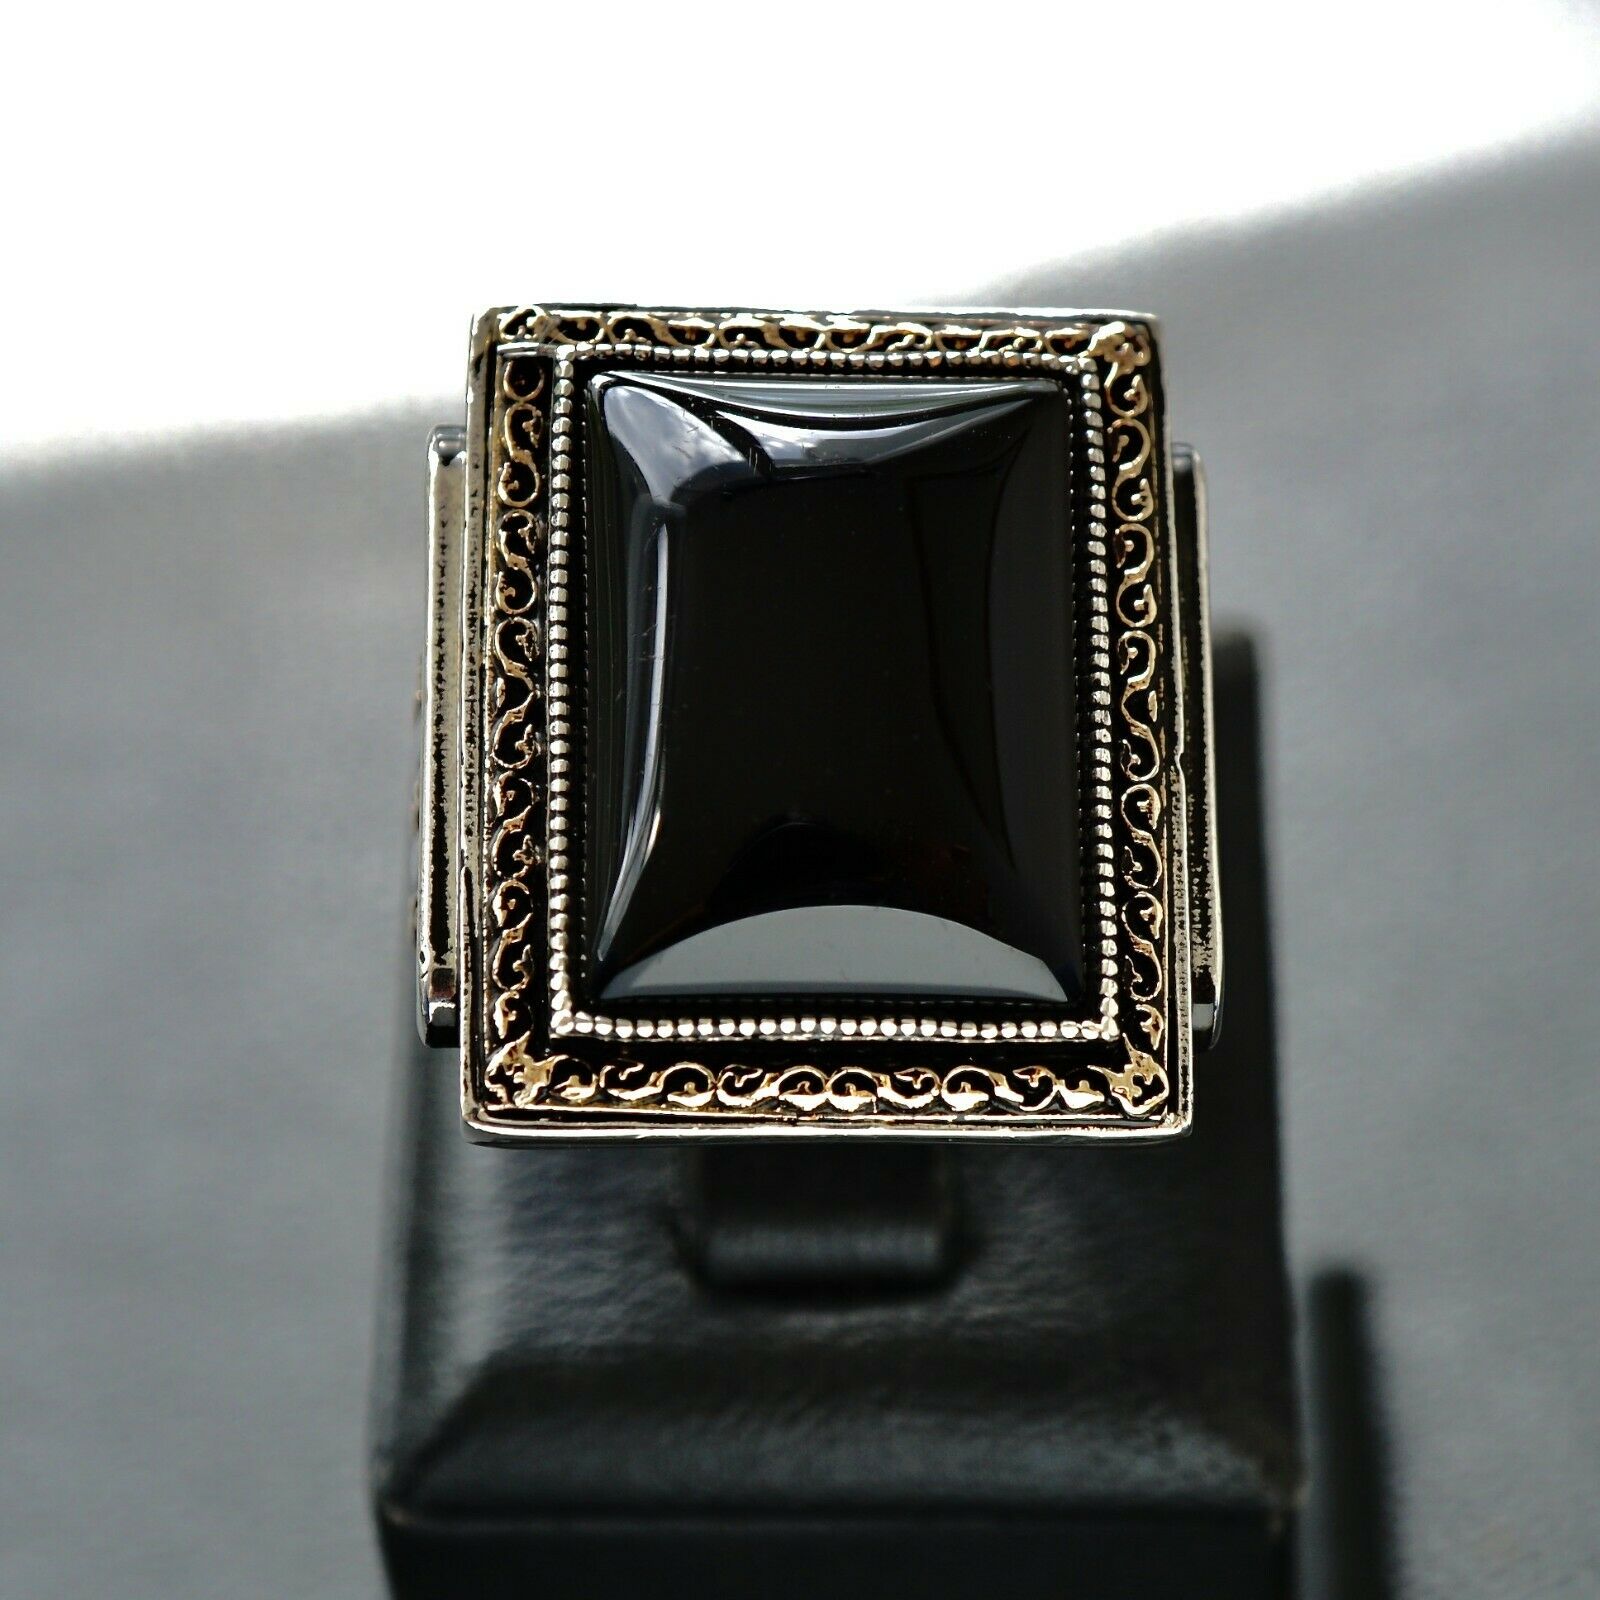 Black Square Onyx Silver Men's Ring